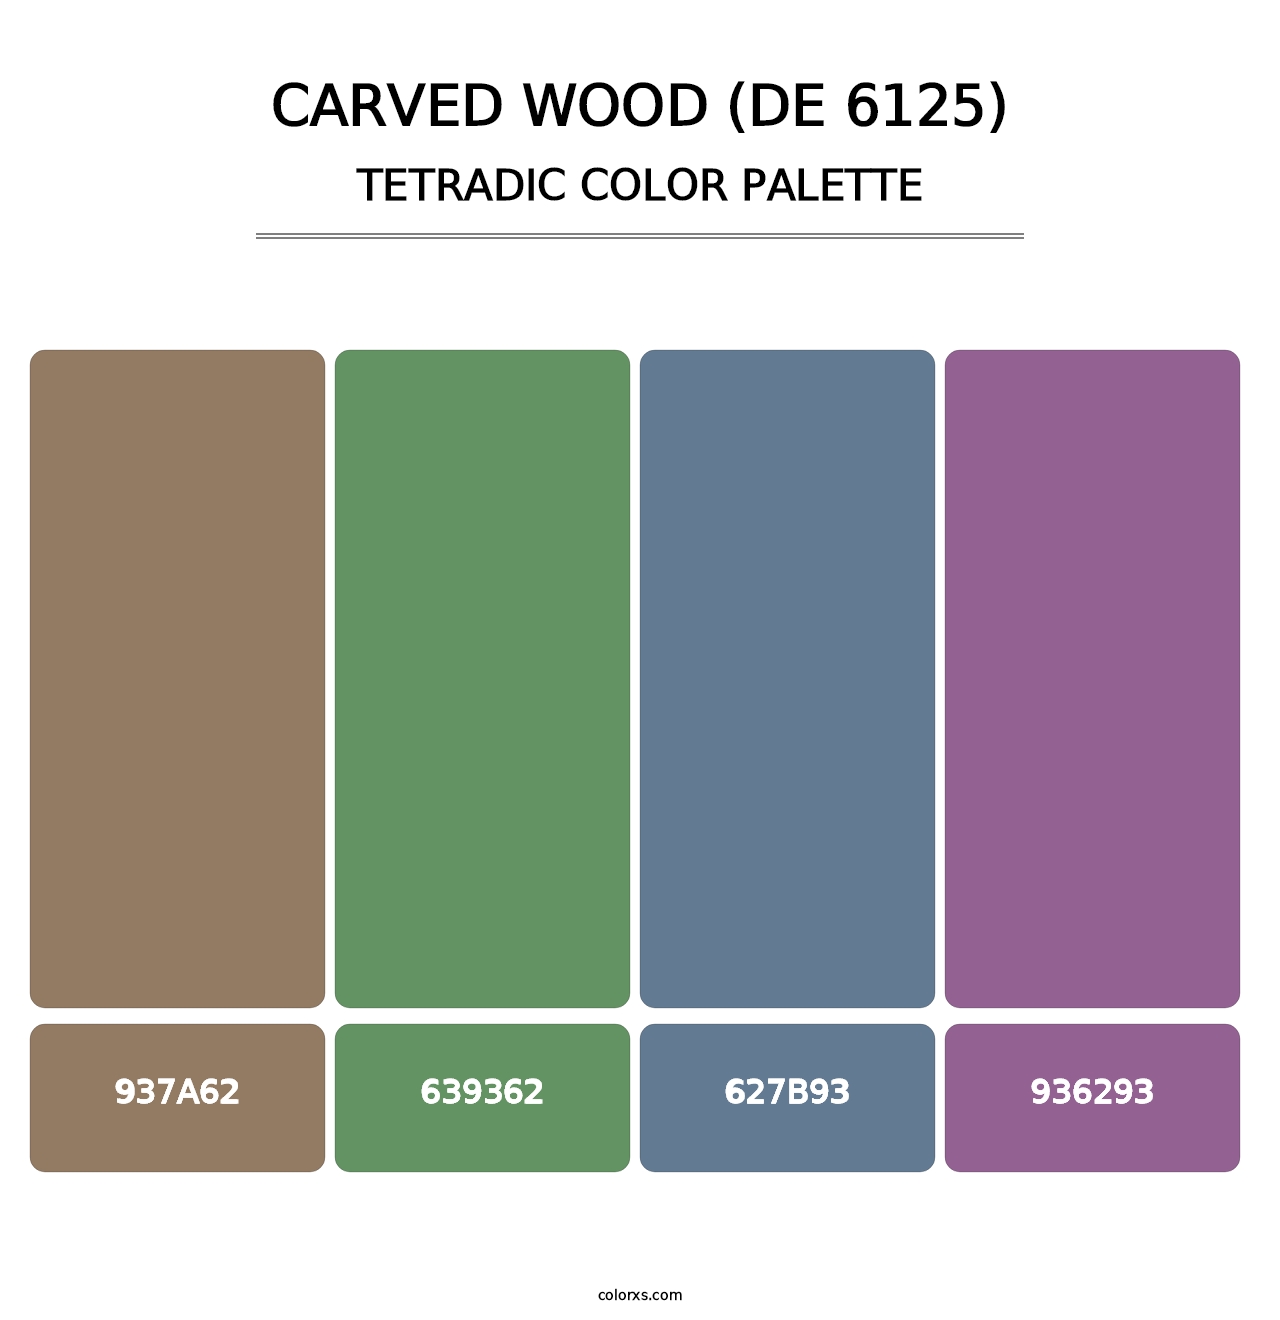 Carved Wood (DE 6125) - Tetradic Color Palette